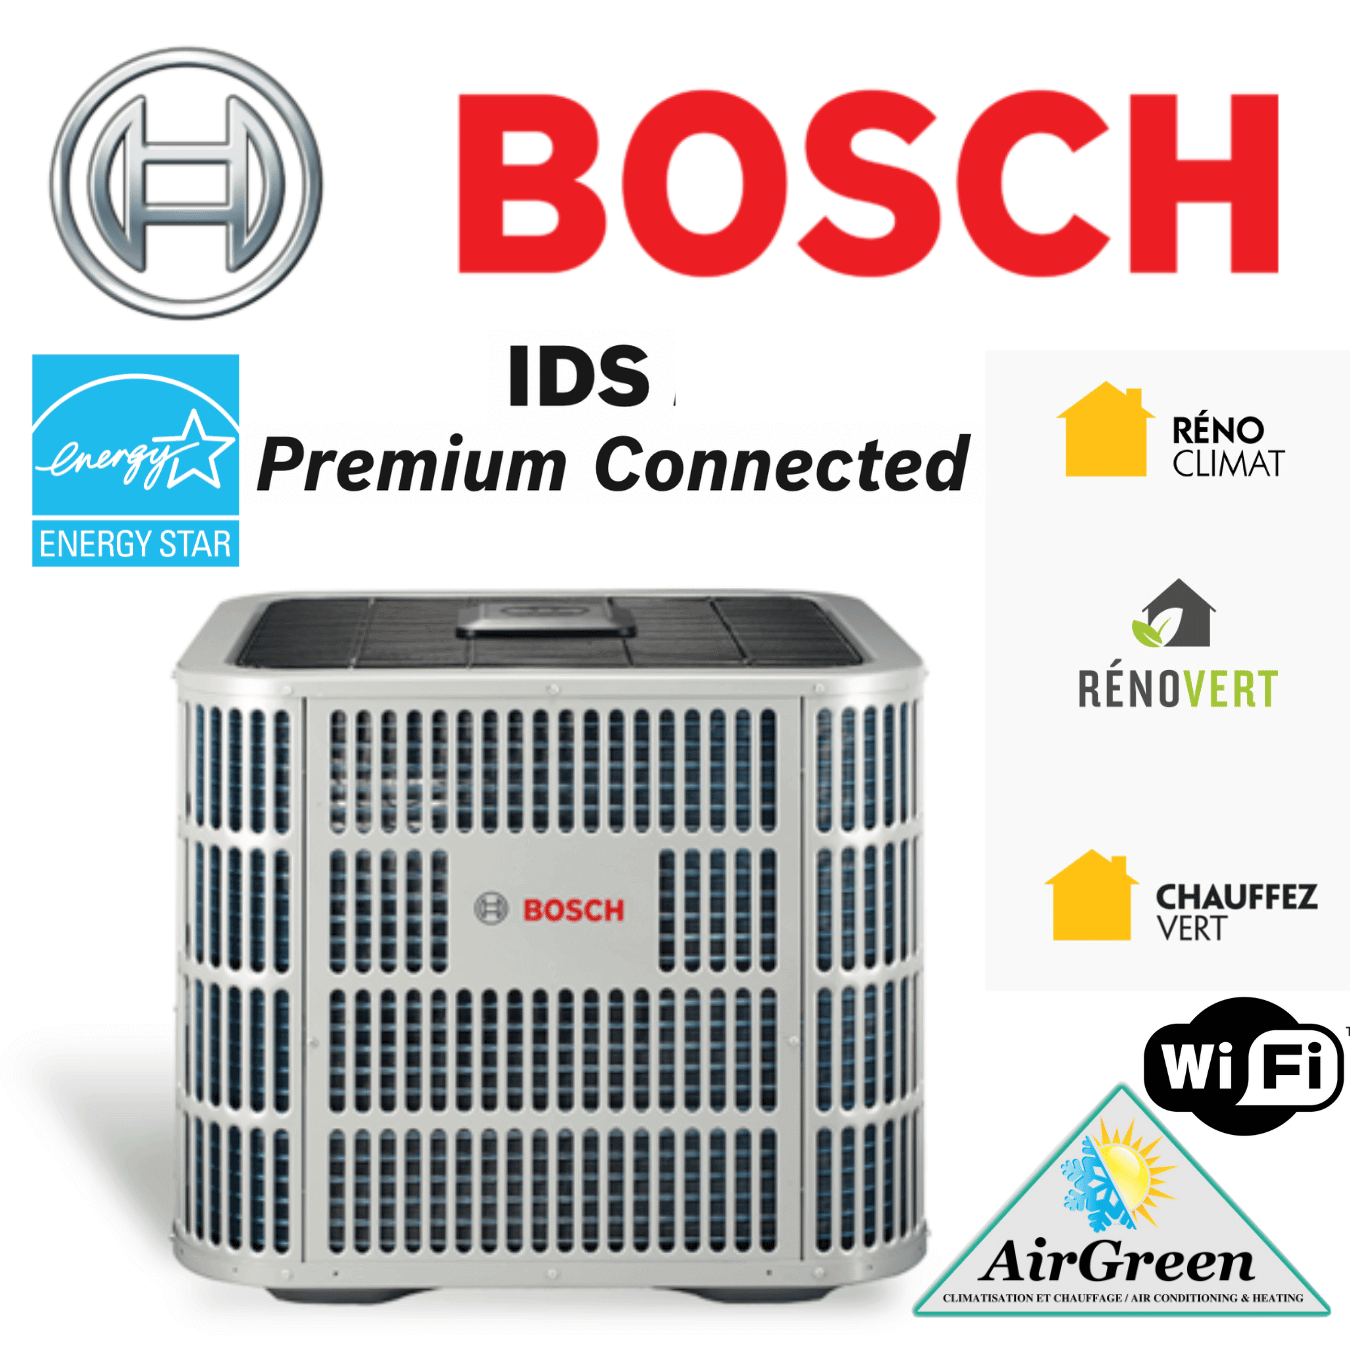 Bosch Inverter Heat Pump Systems